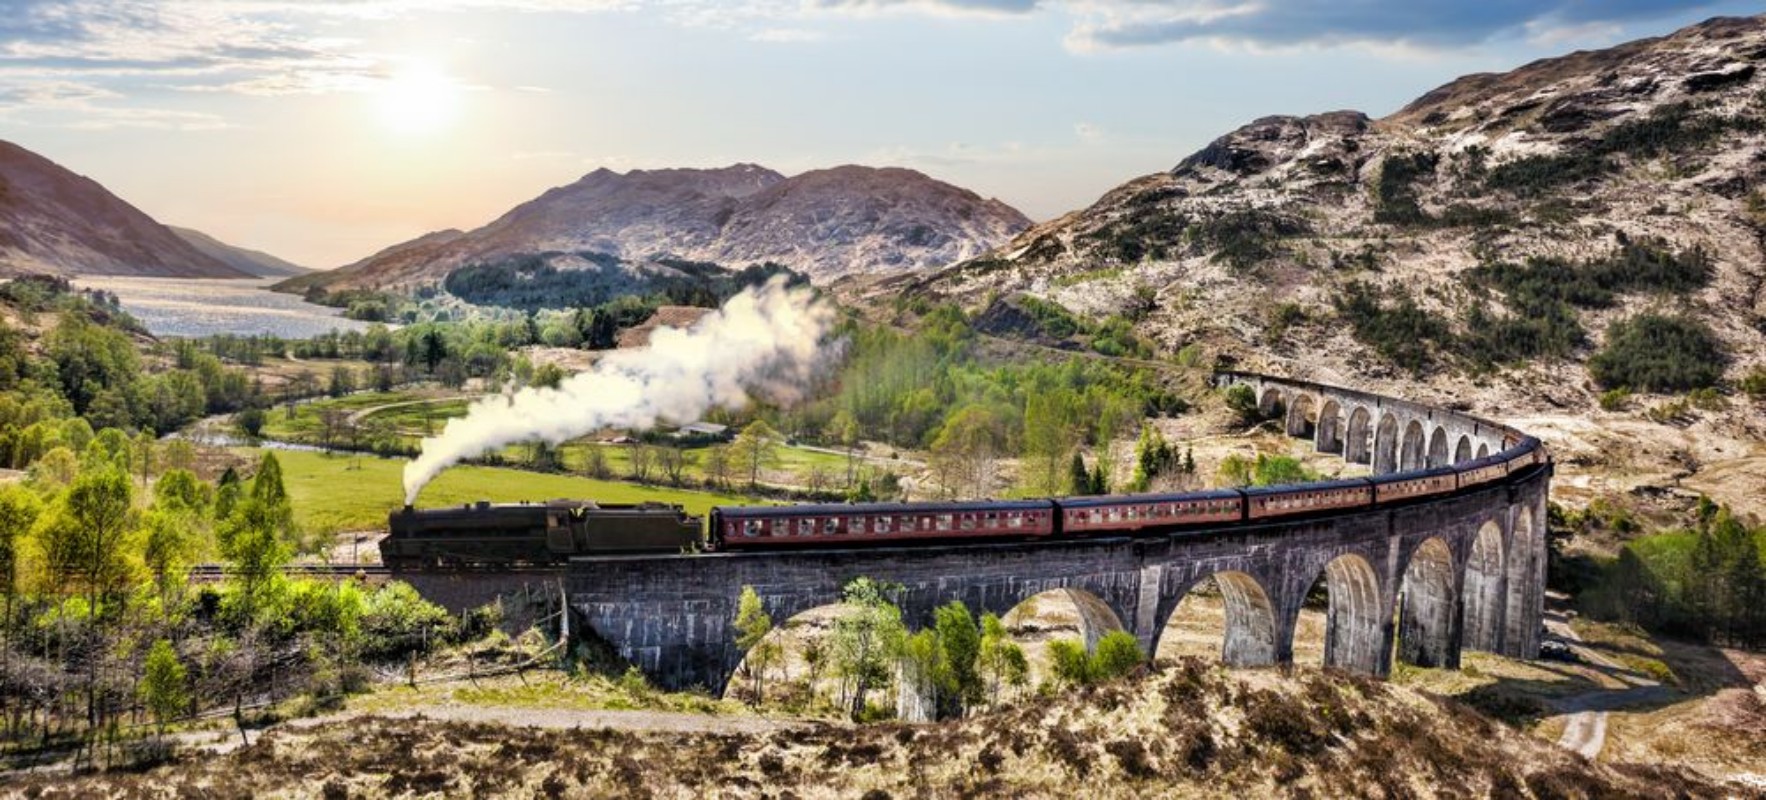 Afbeeldingen van Glenfinnan Railway Viaduct in Scotland with the Jacobite steam train against sunset over lake